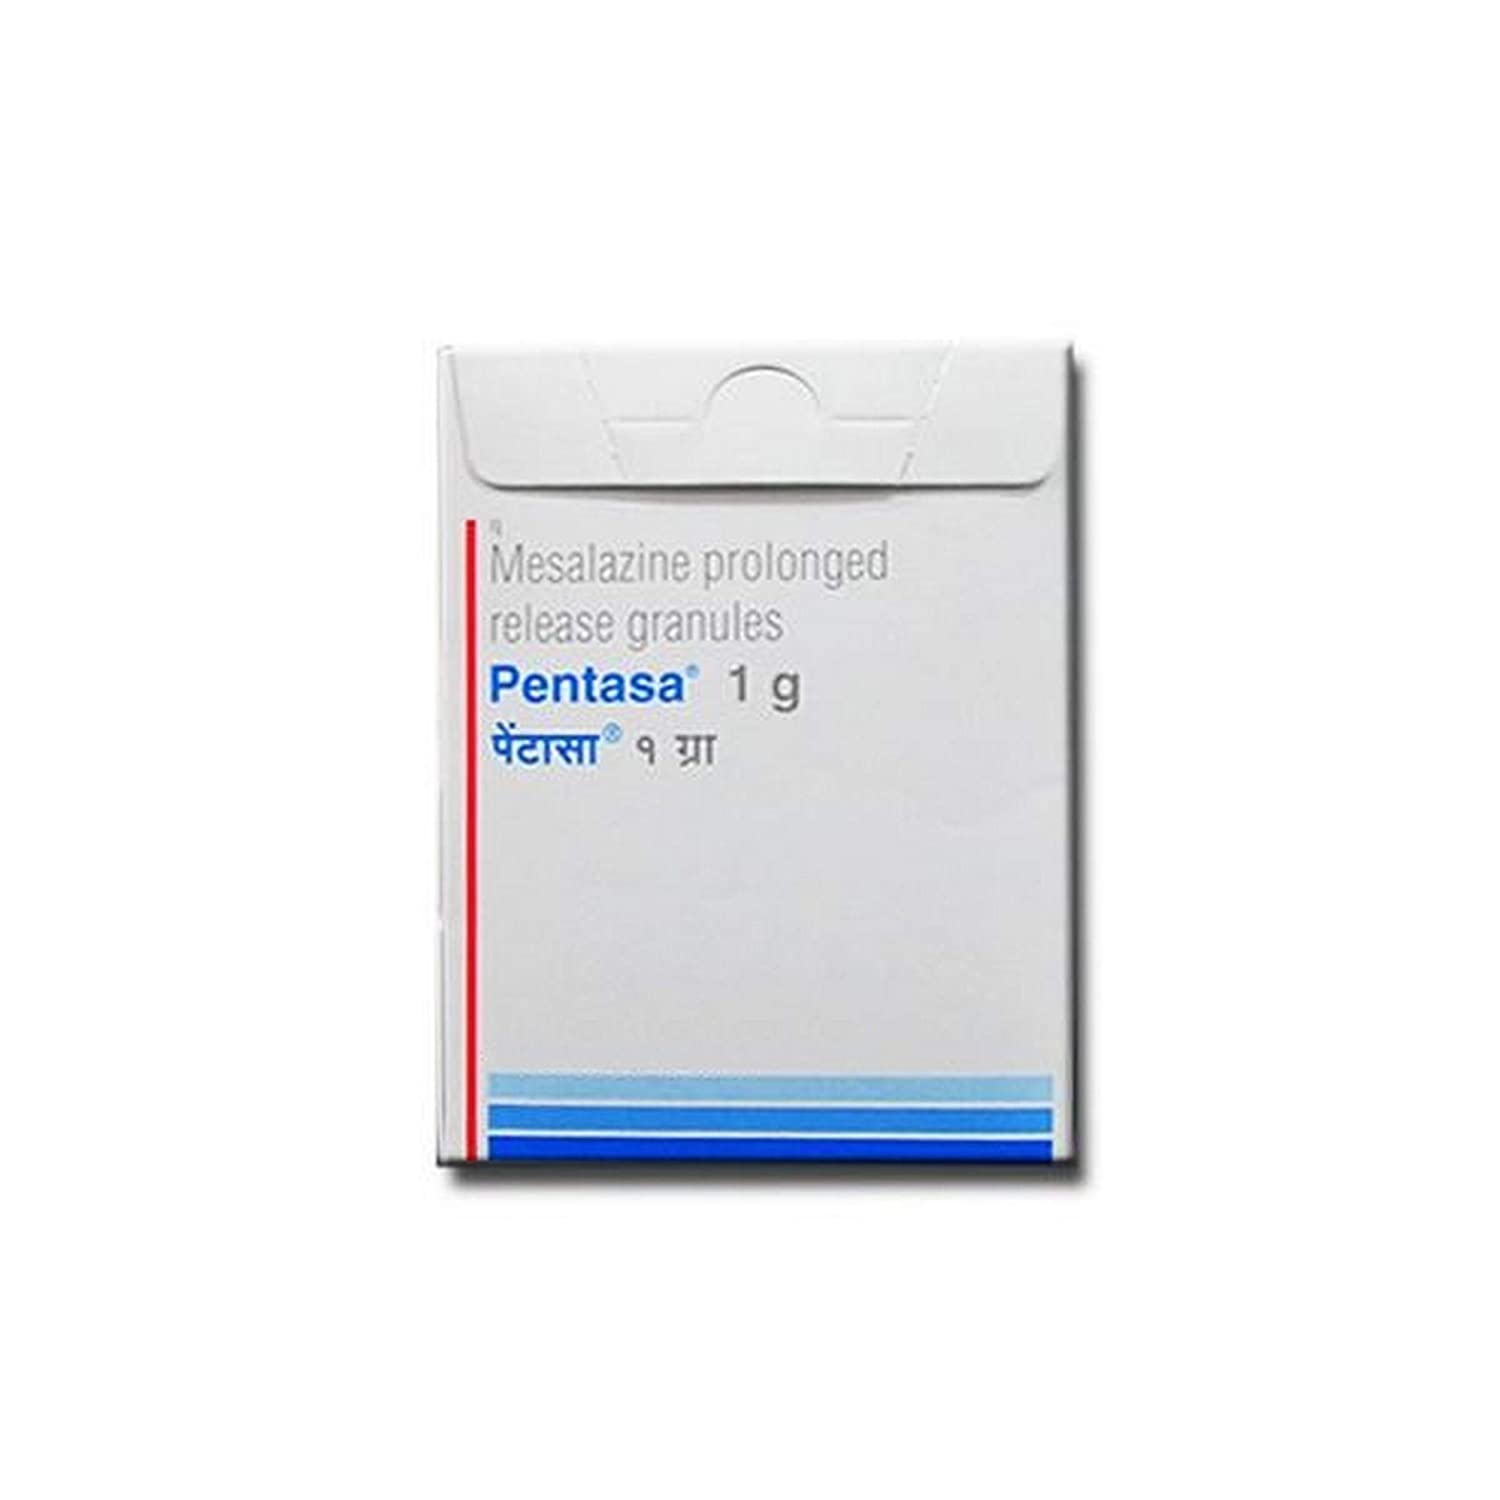 Pentasa 1gm Prolonged Release Granules